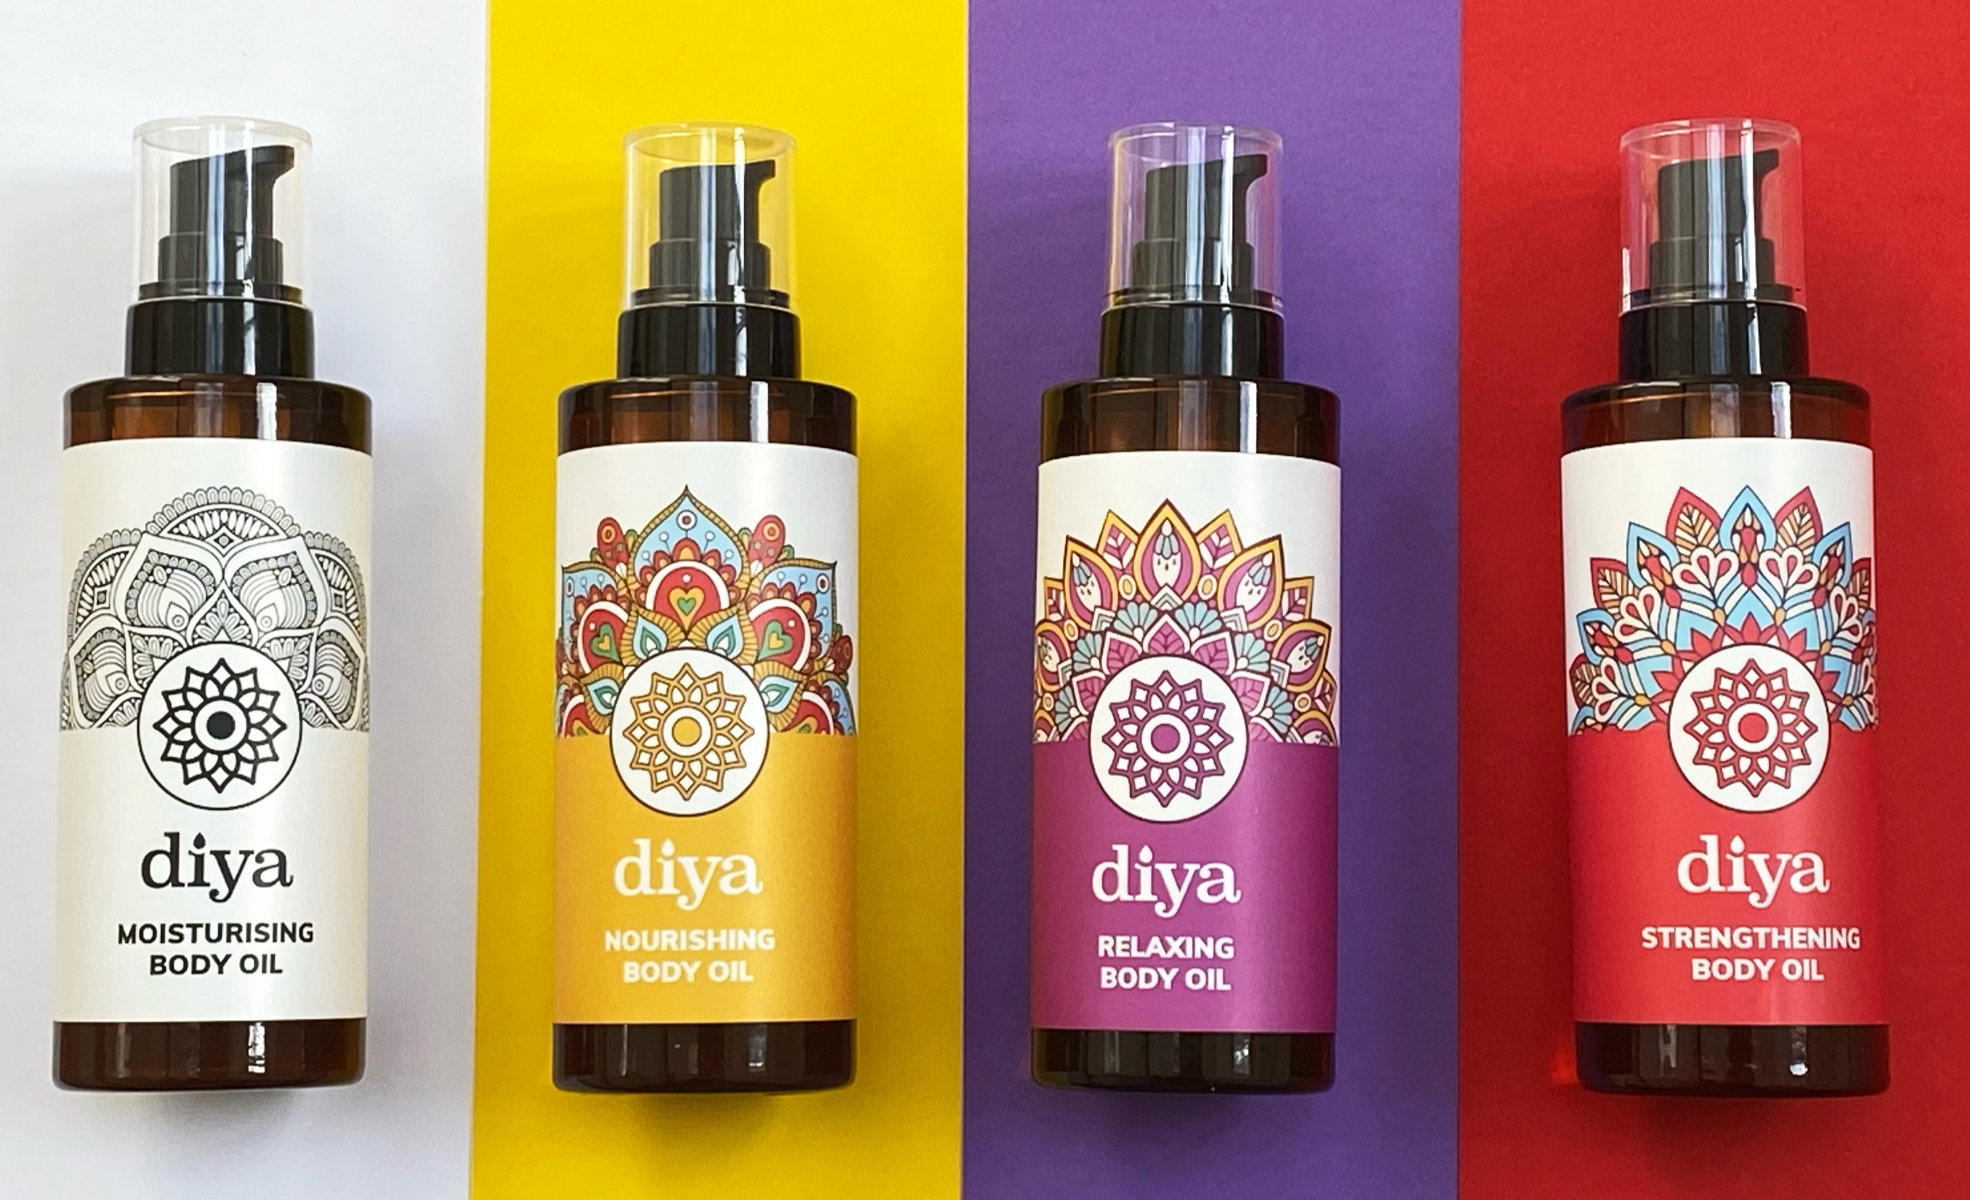 Diya bottles on coloured paper